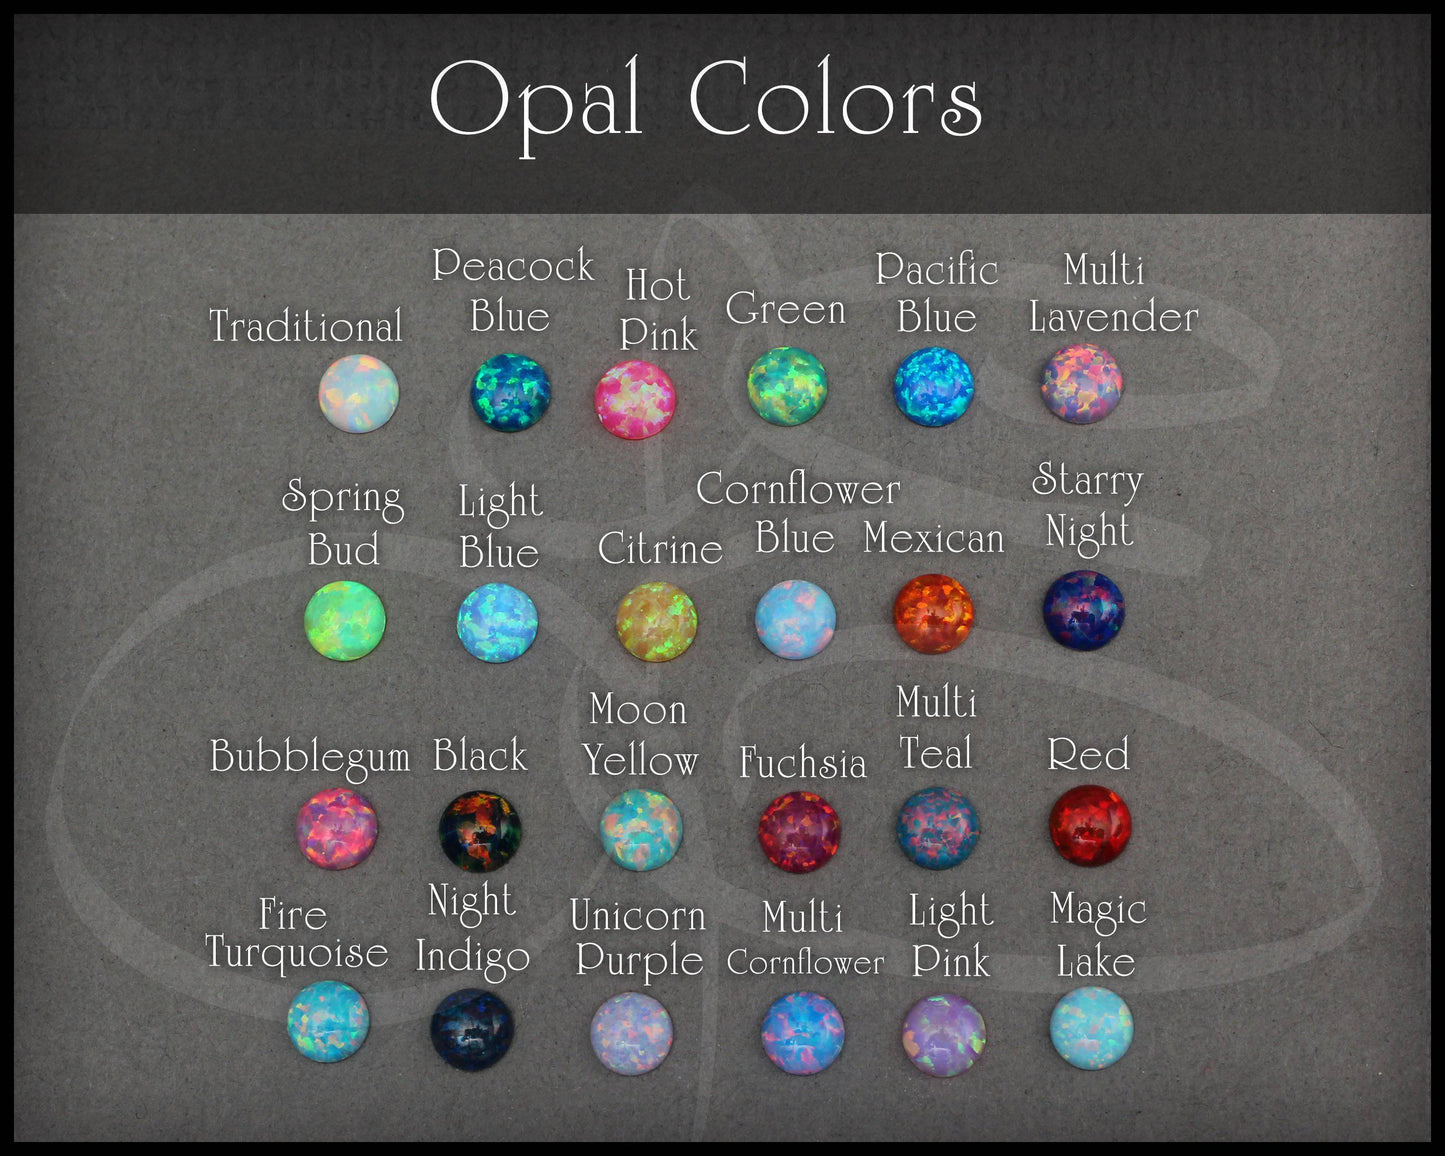 3-Stone Opal Flower Cuff - LE Jewelry Designs